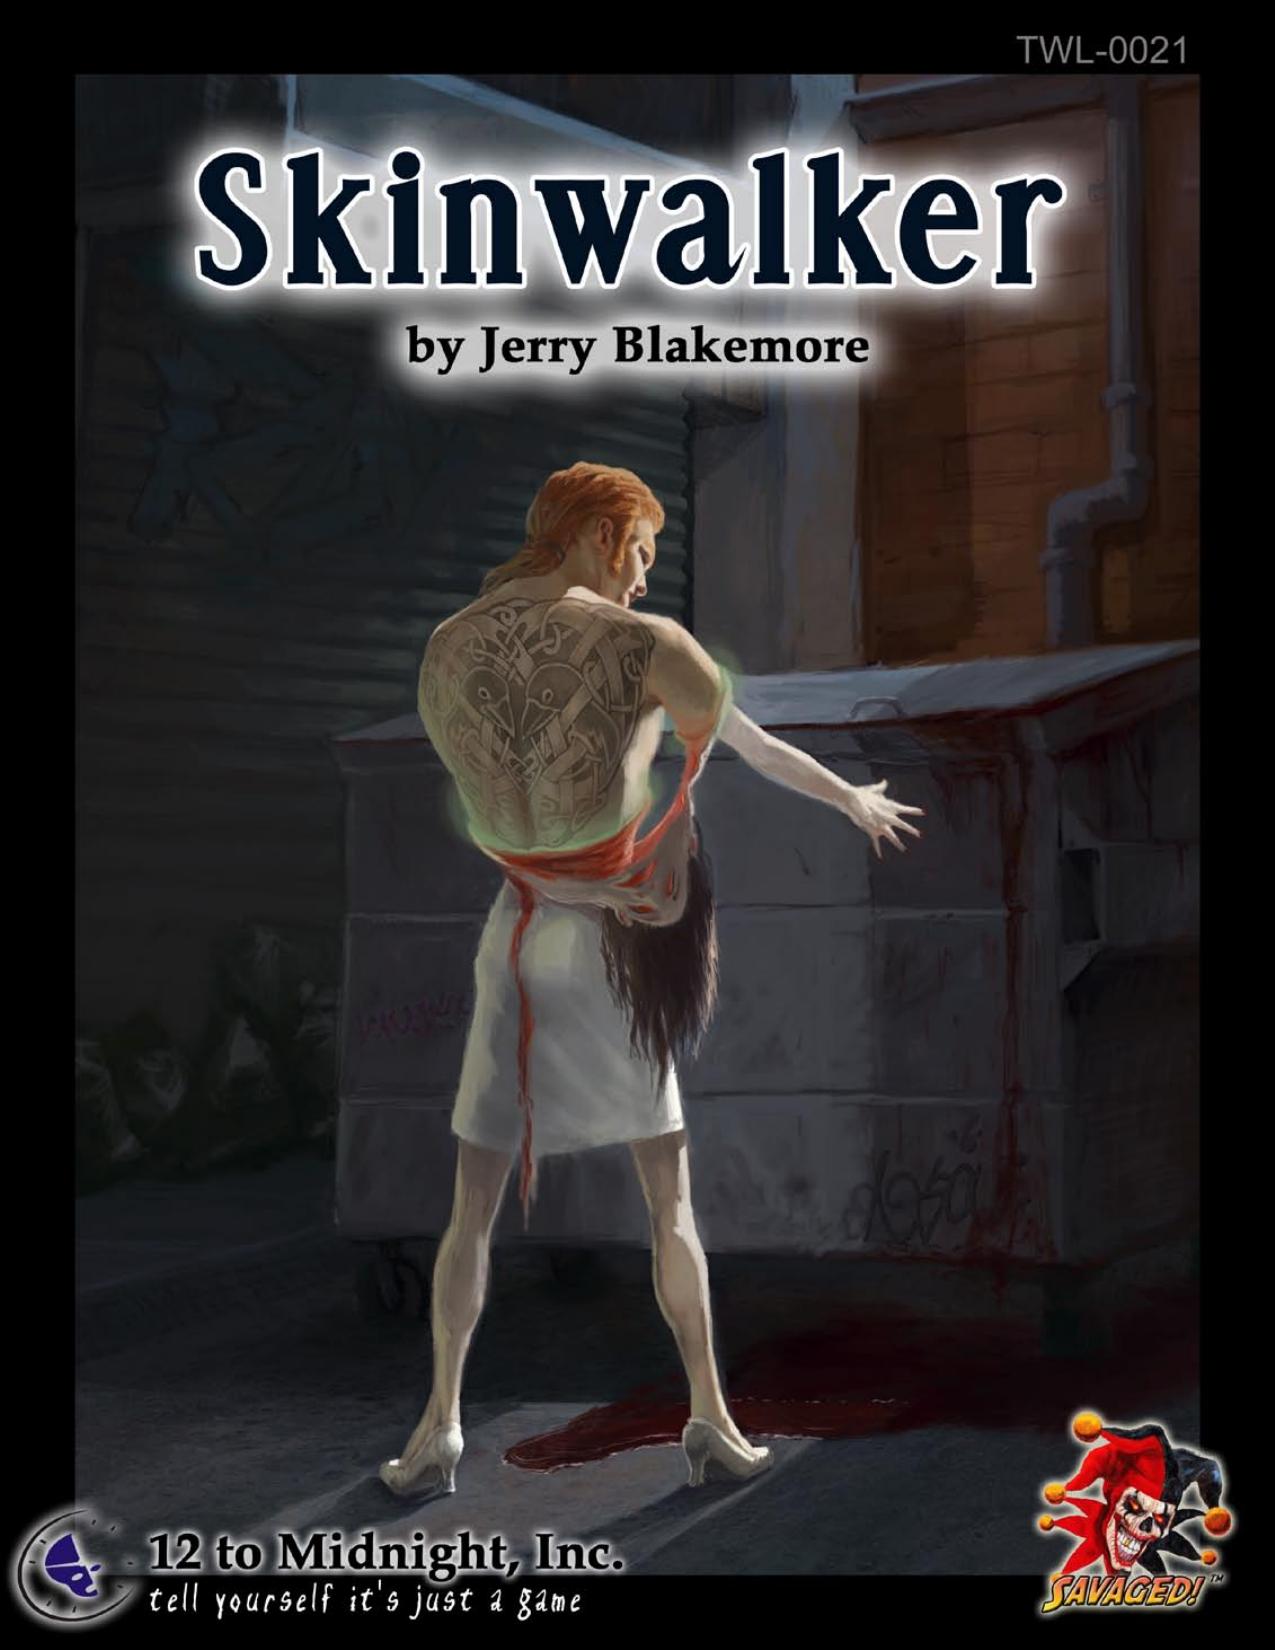 Skinwalker: Savaged edition